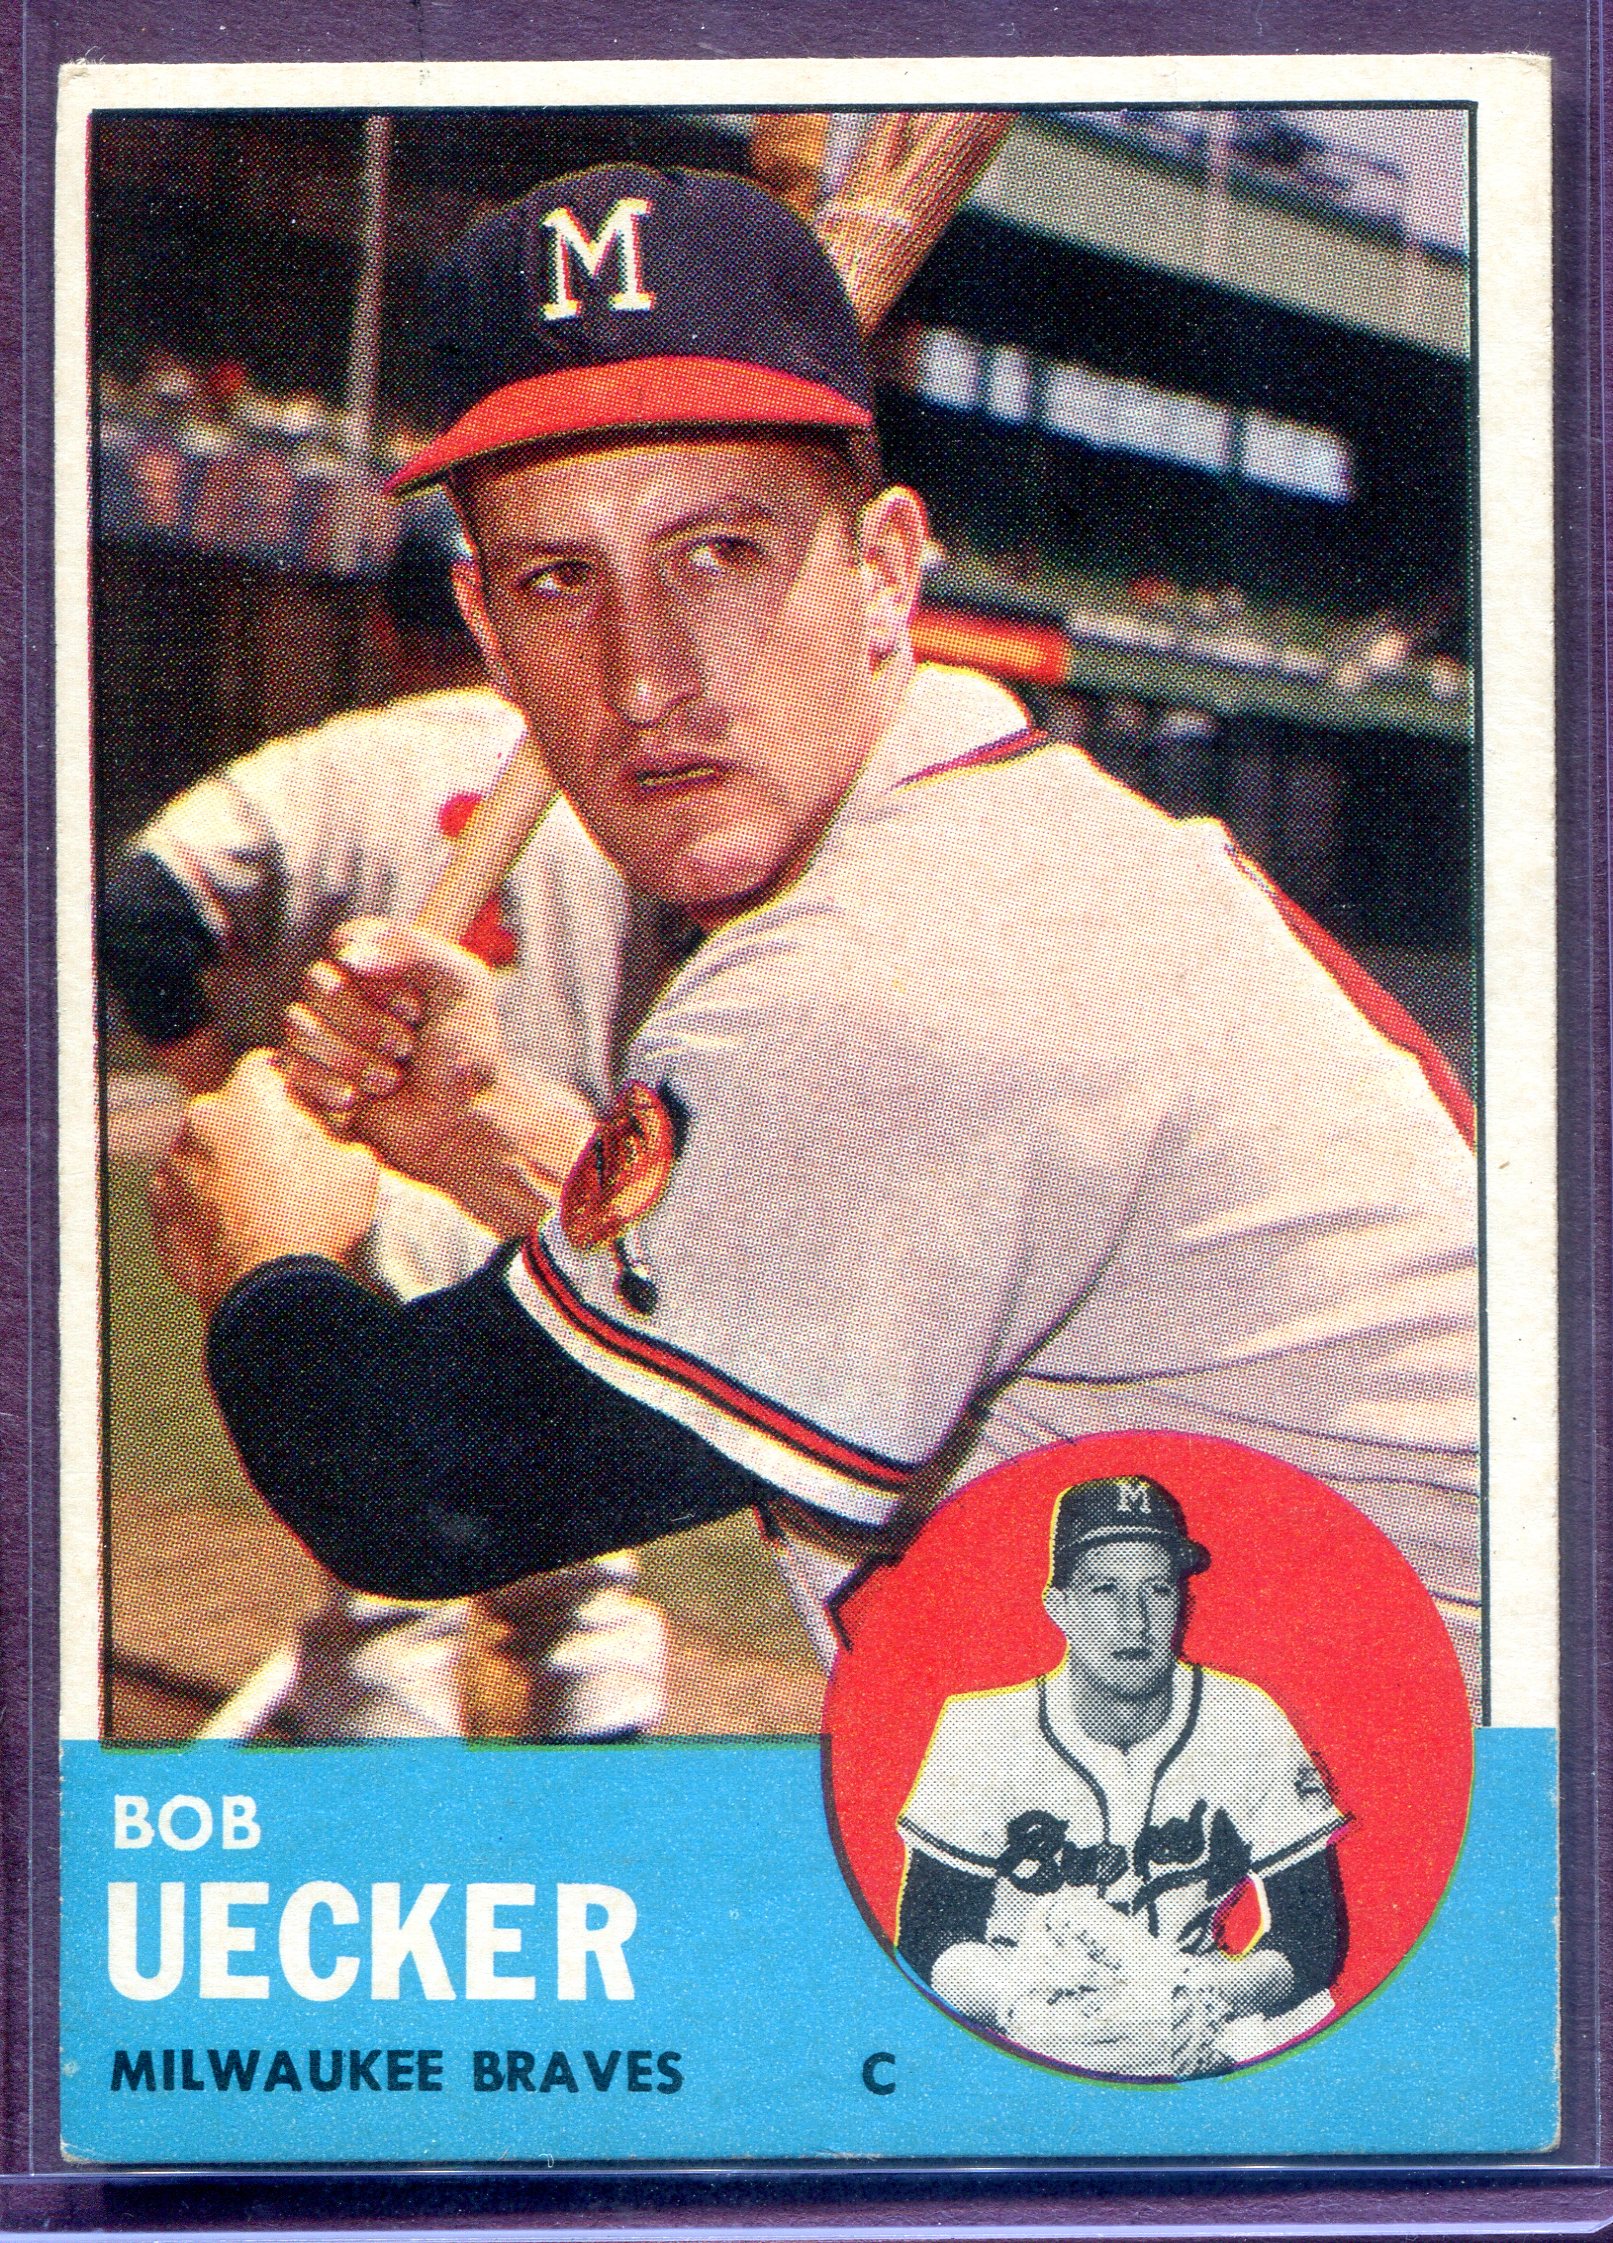 Original Vintage 1963 Topps Baseball Bob Uecker Milwaukee Braves Card #126